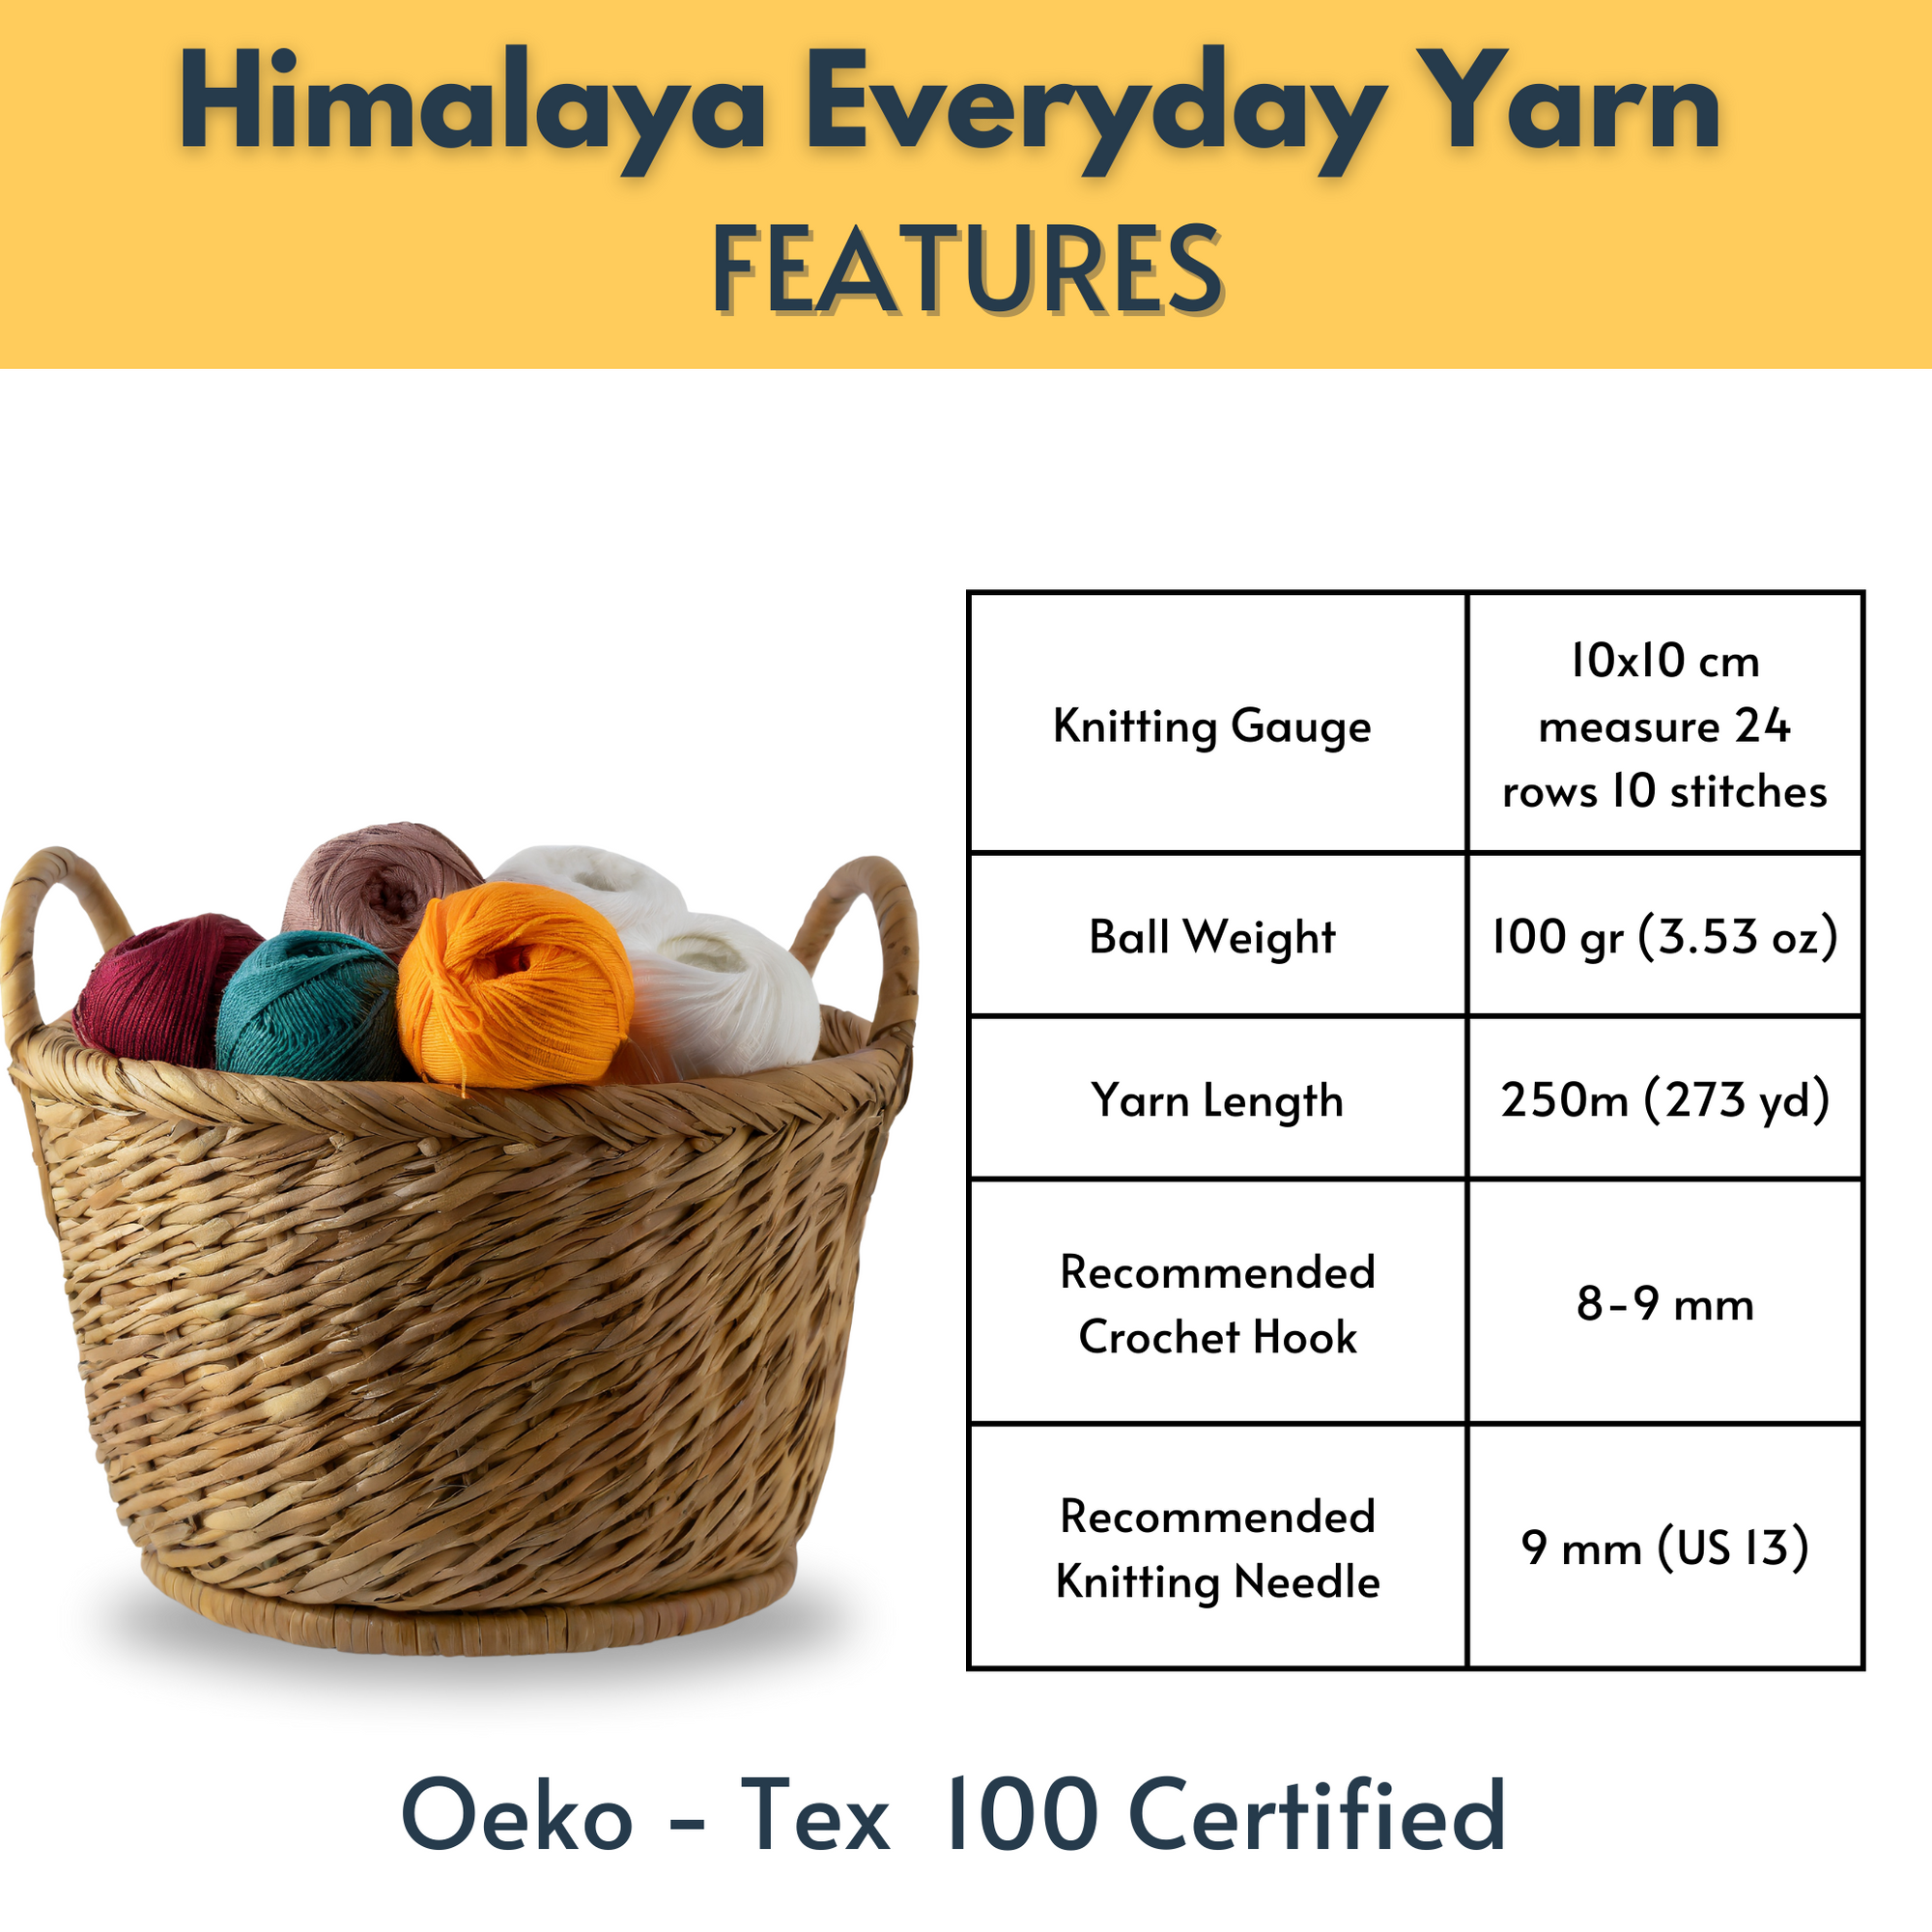 Himalaya Everyday 100% Anti-Pilling Acrylic Yarn, Cyan Blue - 70821